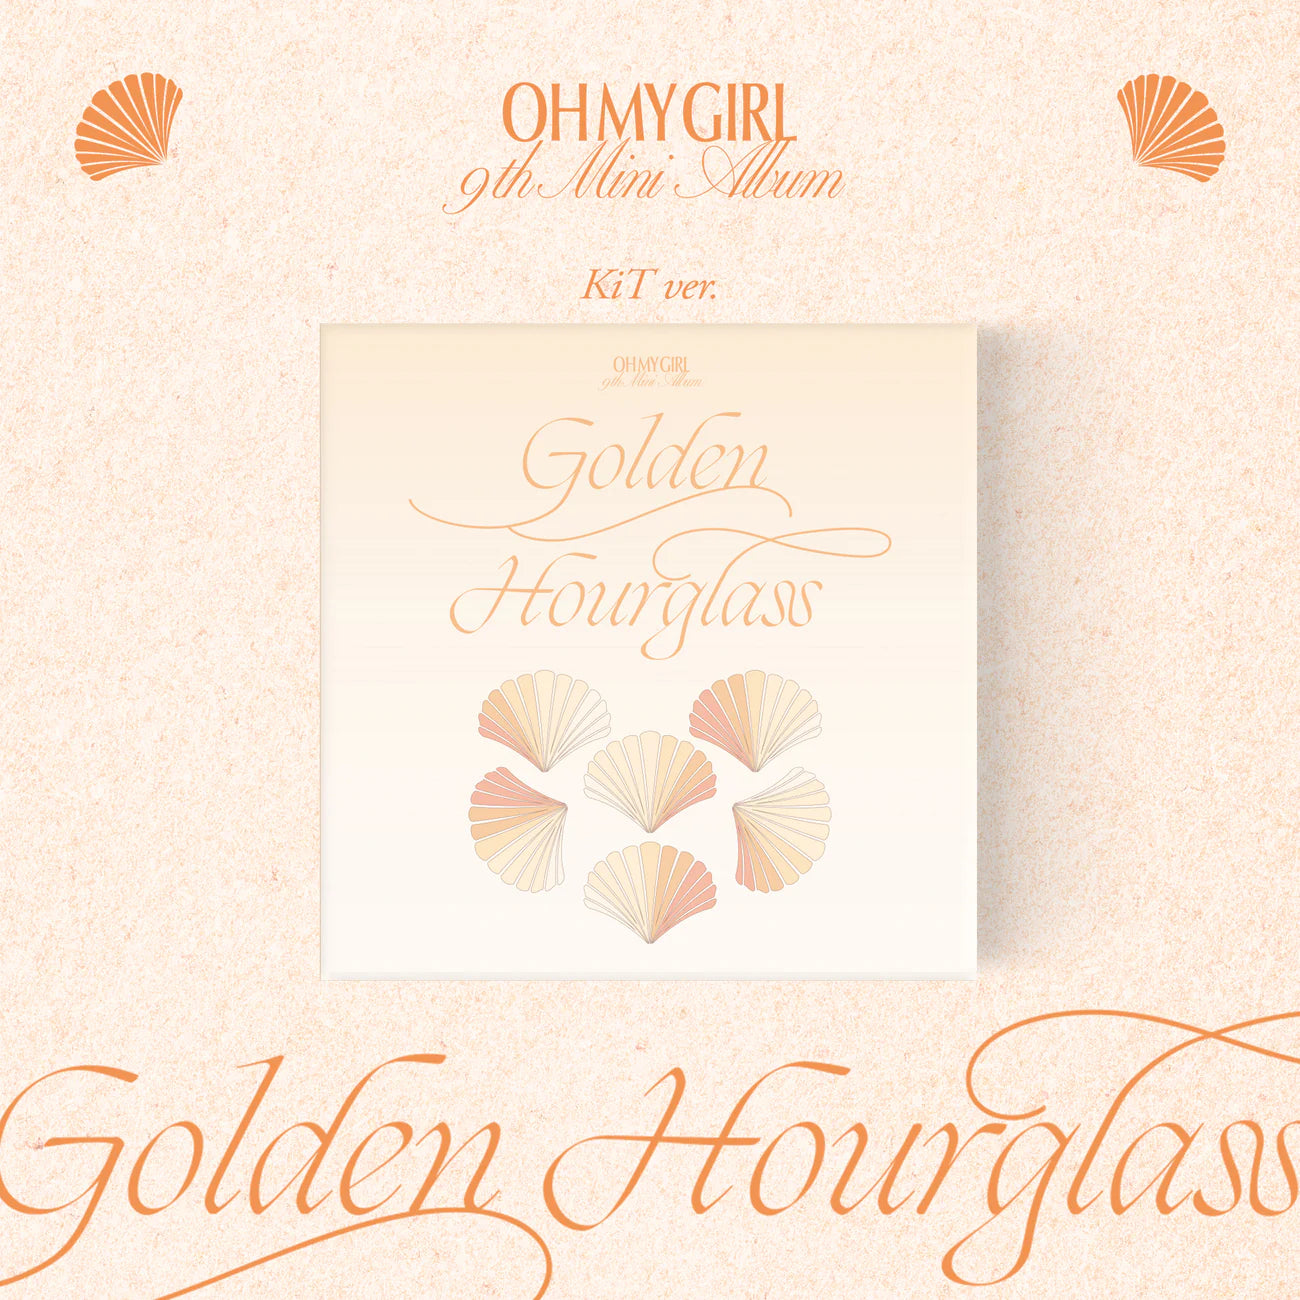 OH MY GIRL | Golden Hourglass (9th Mini Album) KiT